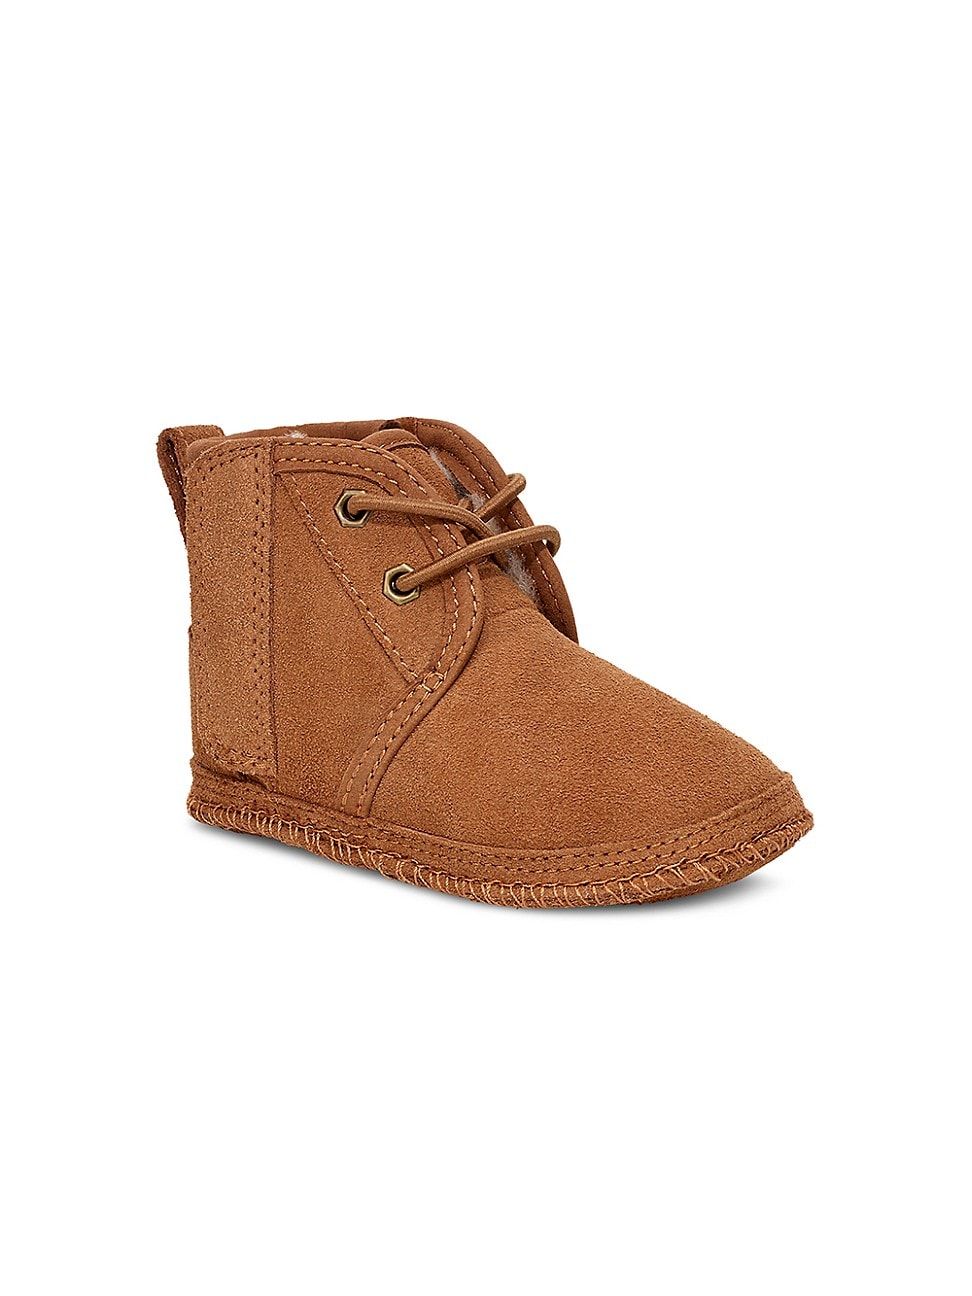 Baby's Neumel Griptape Boots - Chestnut - Size 2 (Baby) | Saks Fifth Avenue